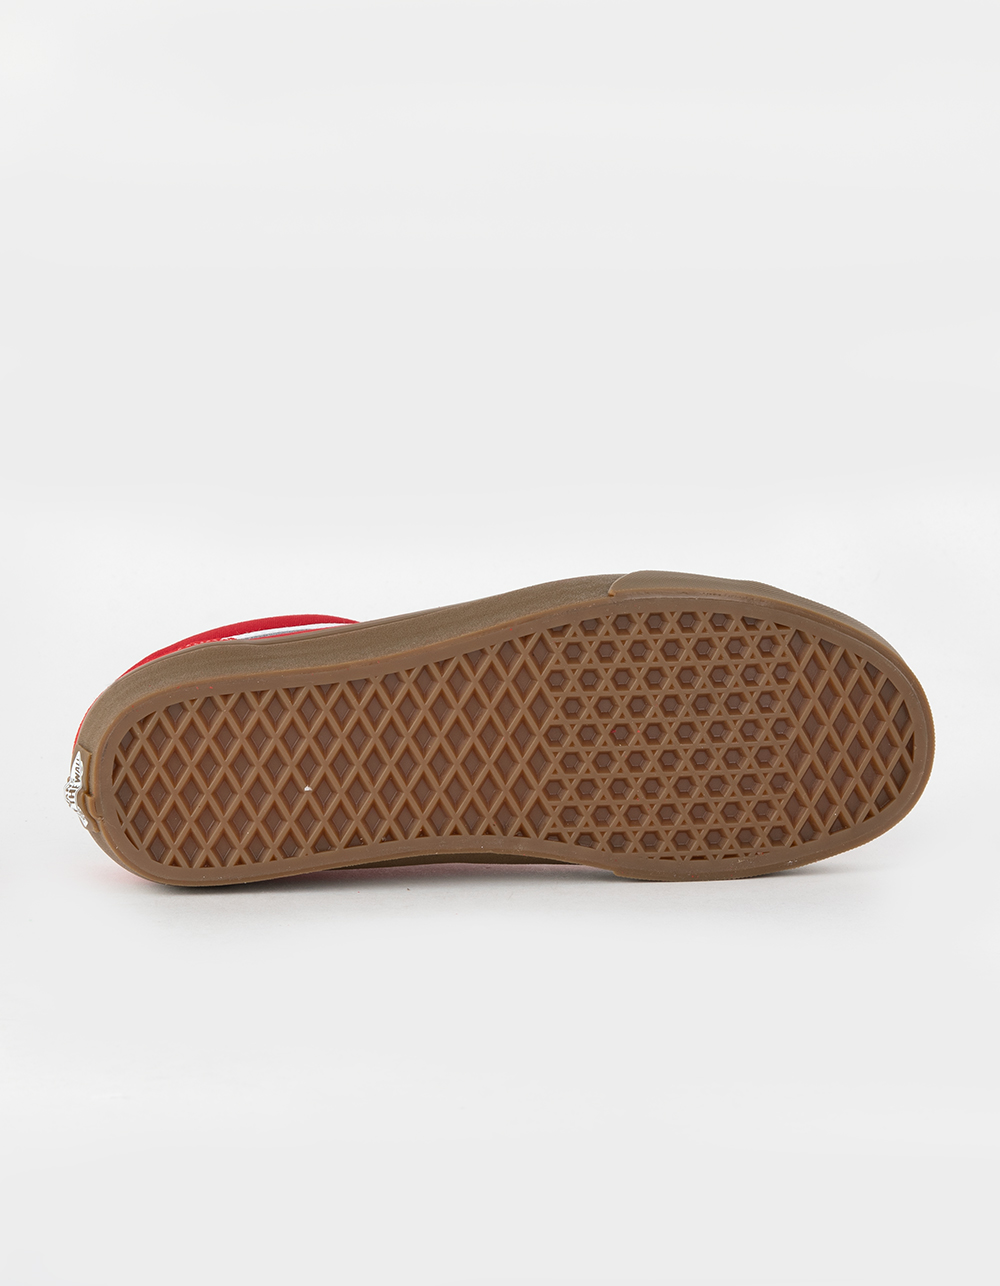 VANS Gum Style 36 Shoes - RED | Tillys